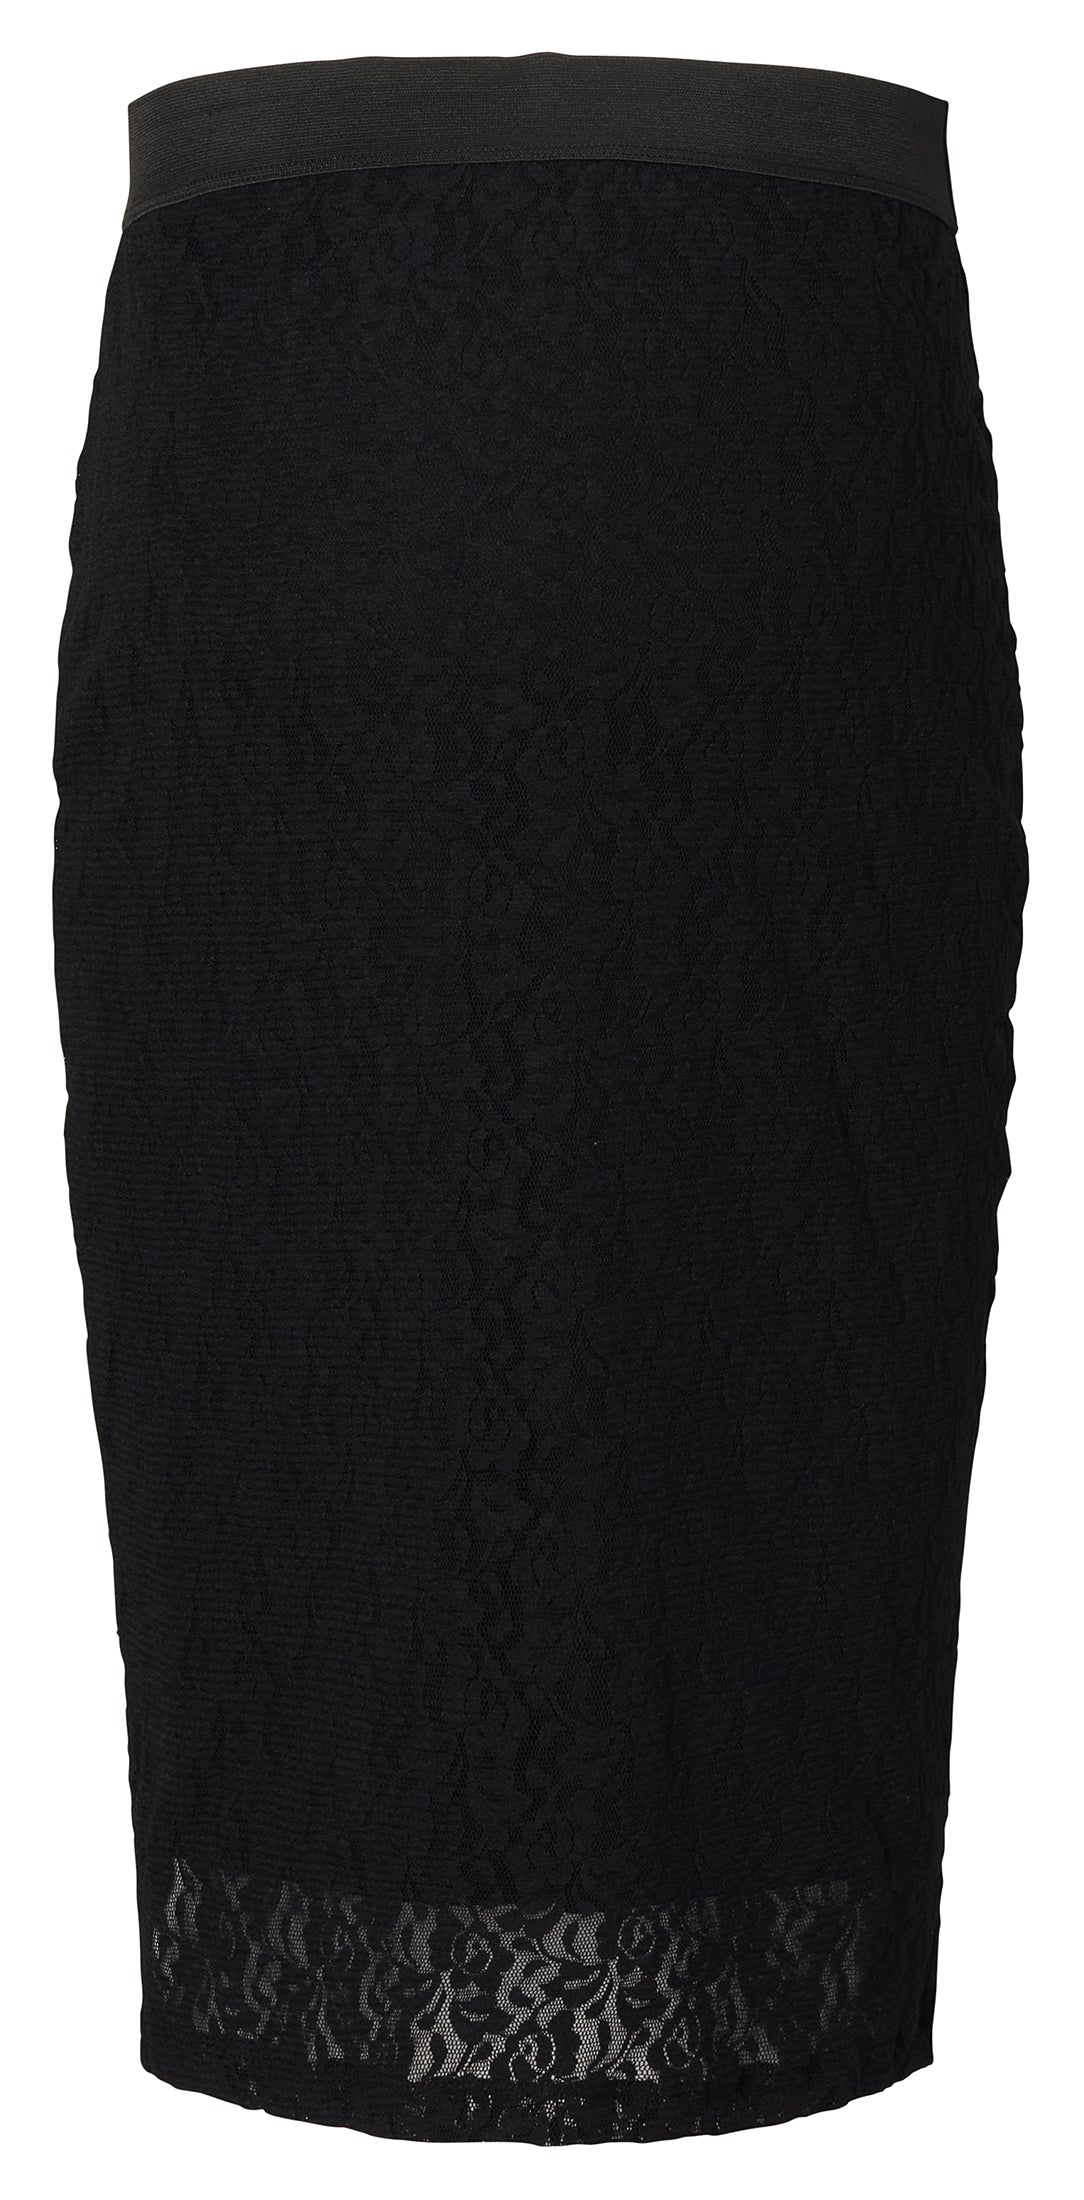 Lace skirt - Black